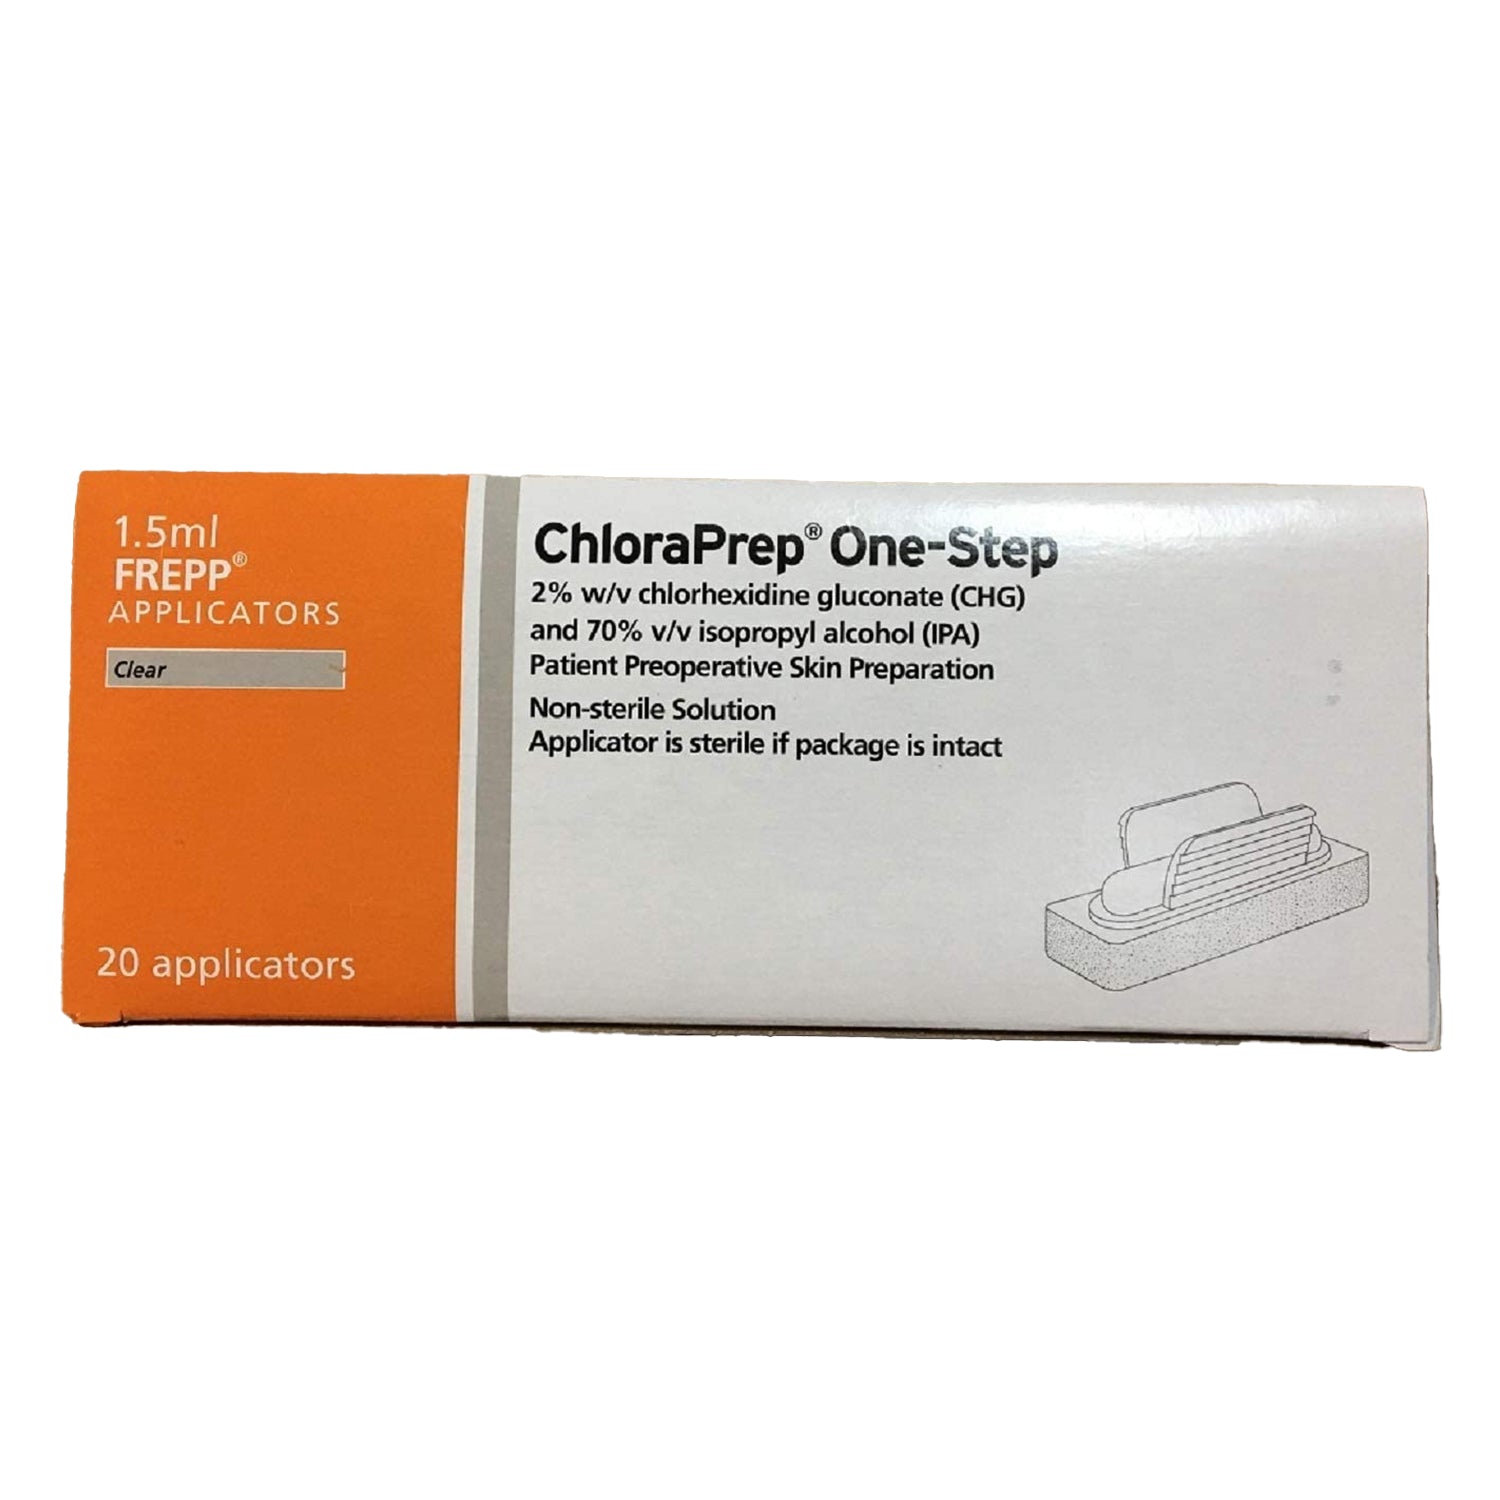 ChloraPrep Frepp Applicator | 1.5ml | Pack of 20 (1)